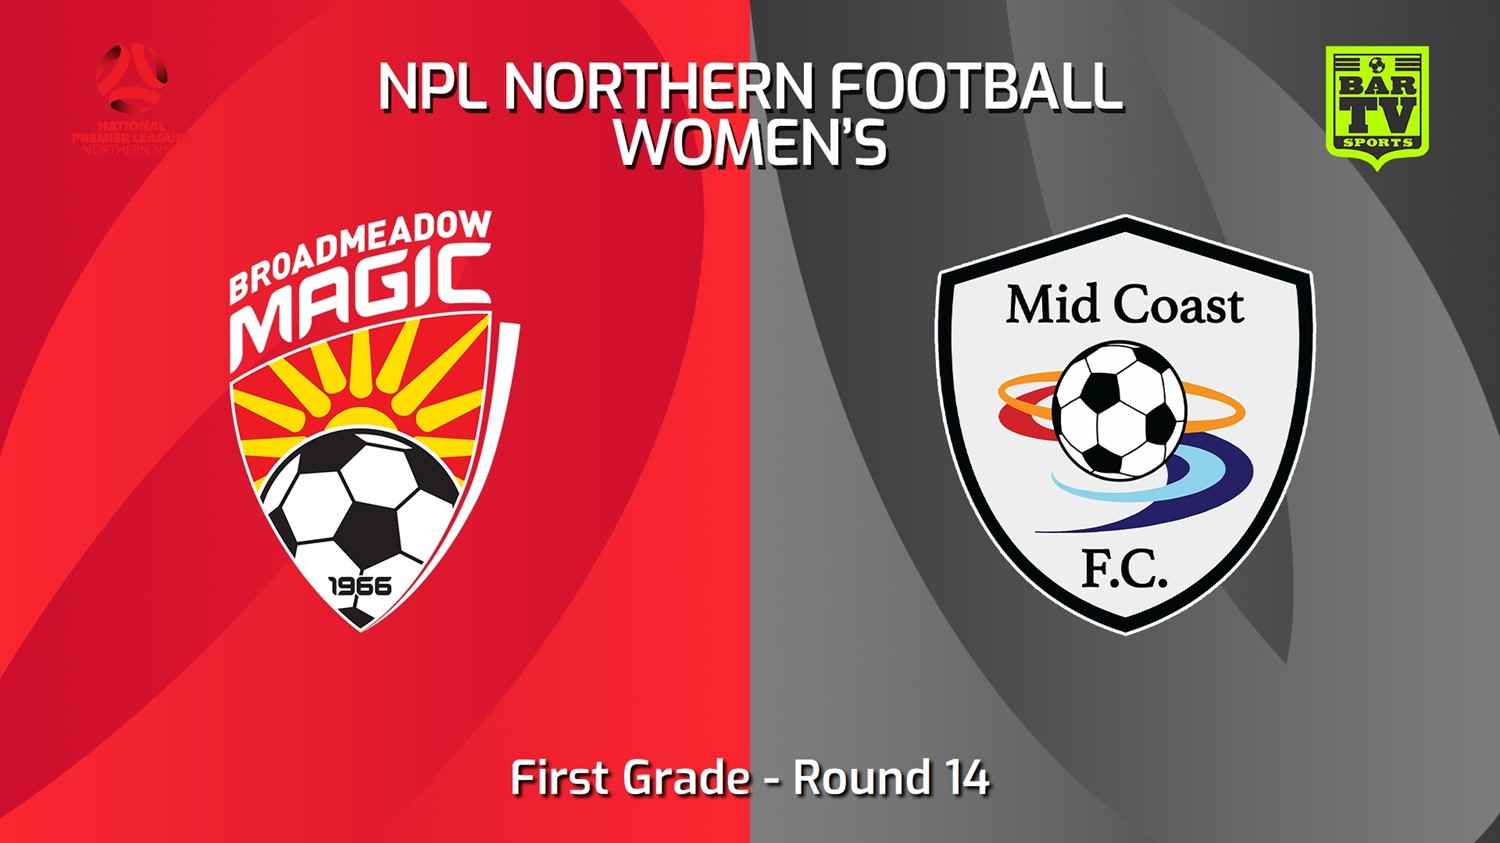 240616-video-NNSW NPLW Round 14 - Broadmeadow Magic FC W v Mid Coast FC W Minigame Slate Image